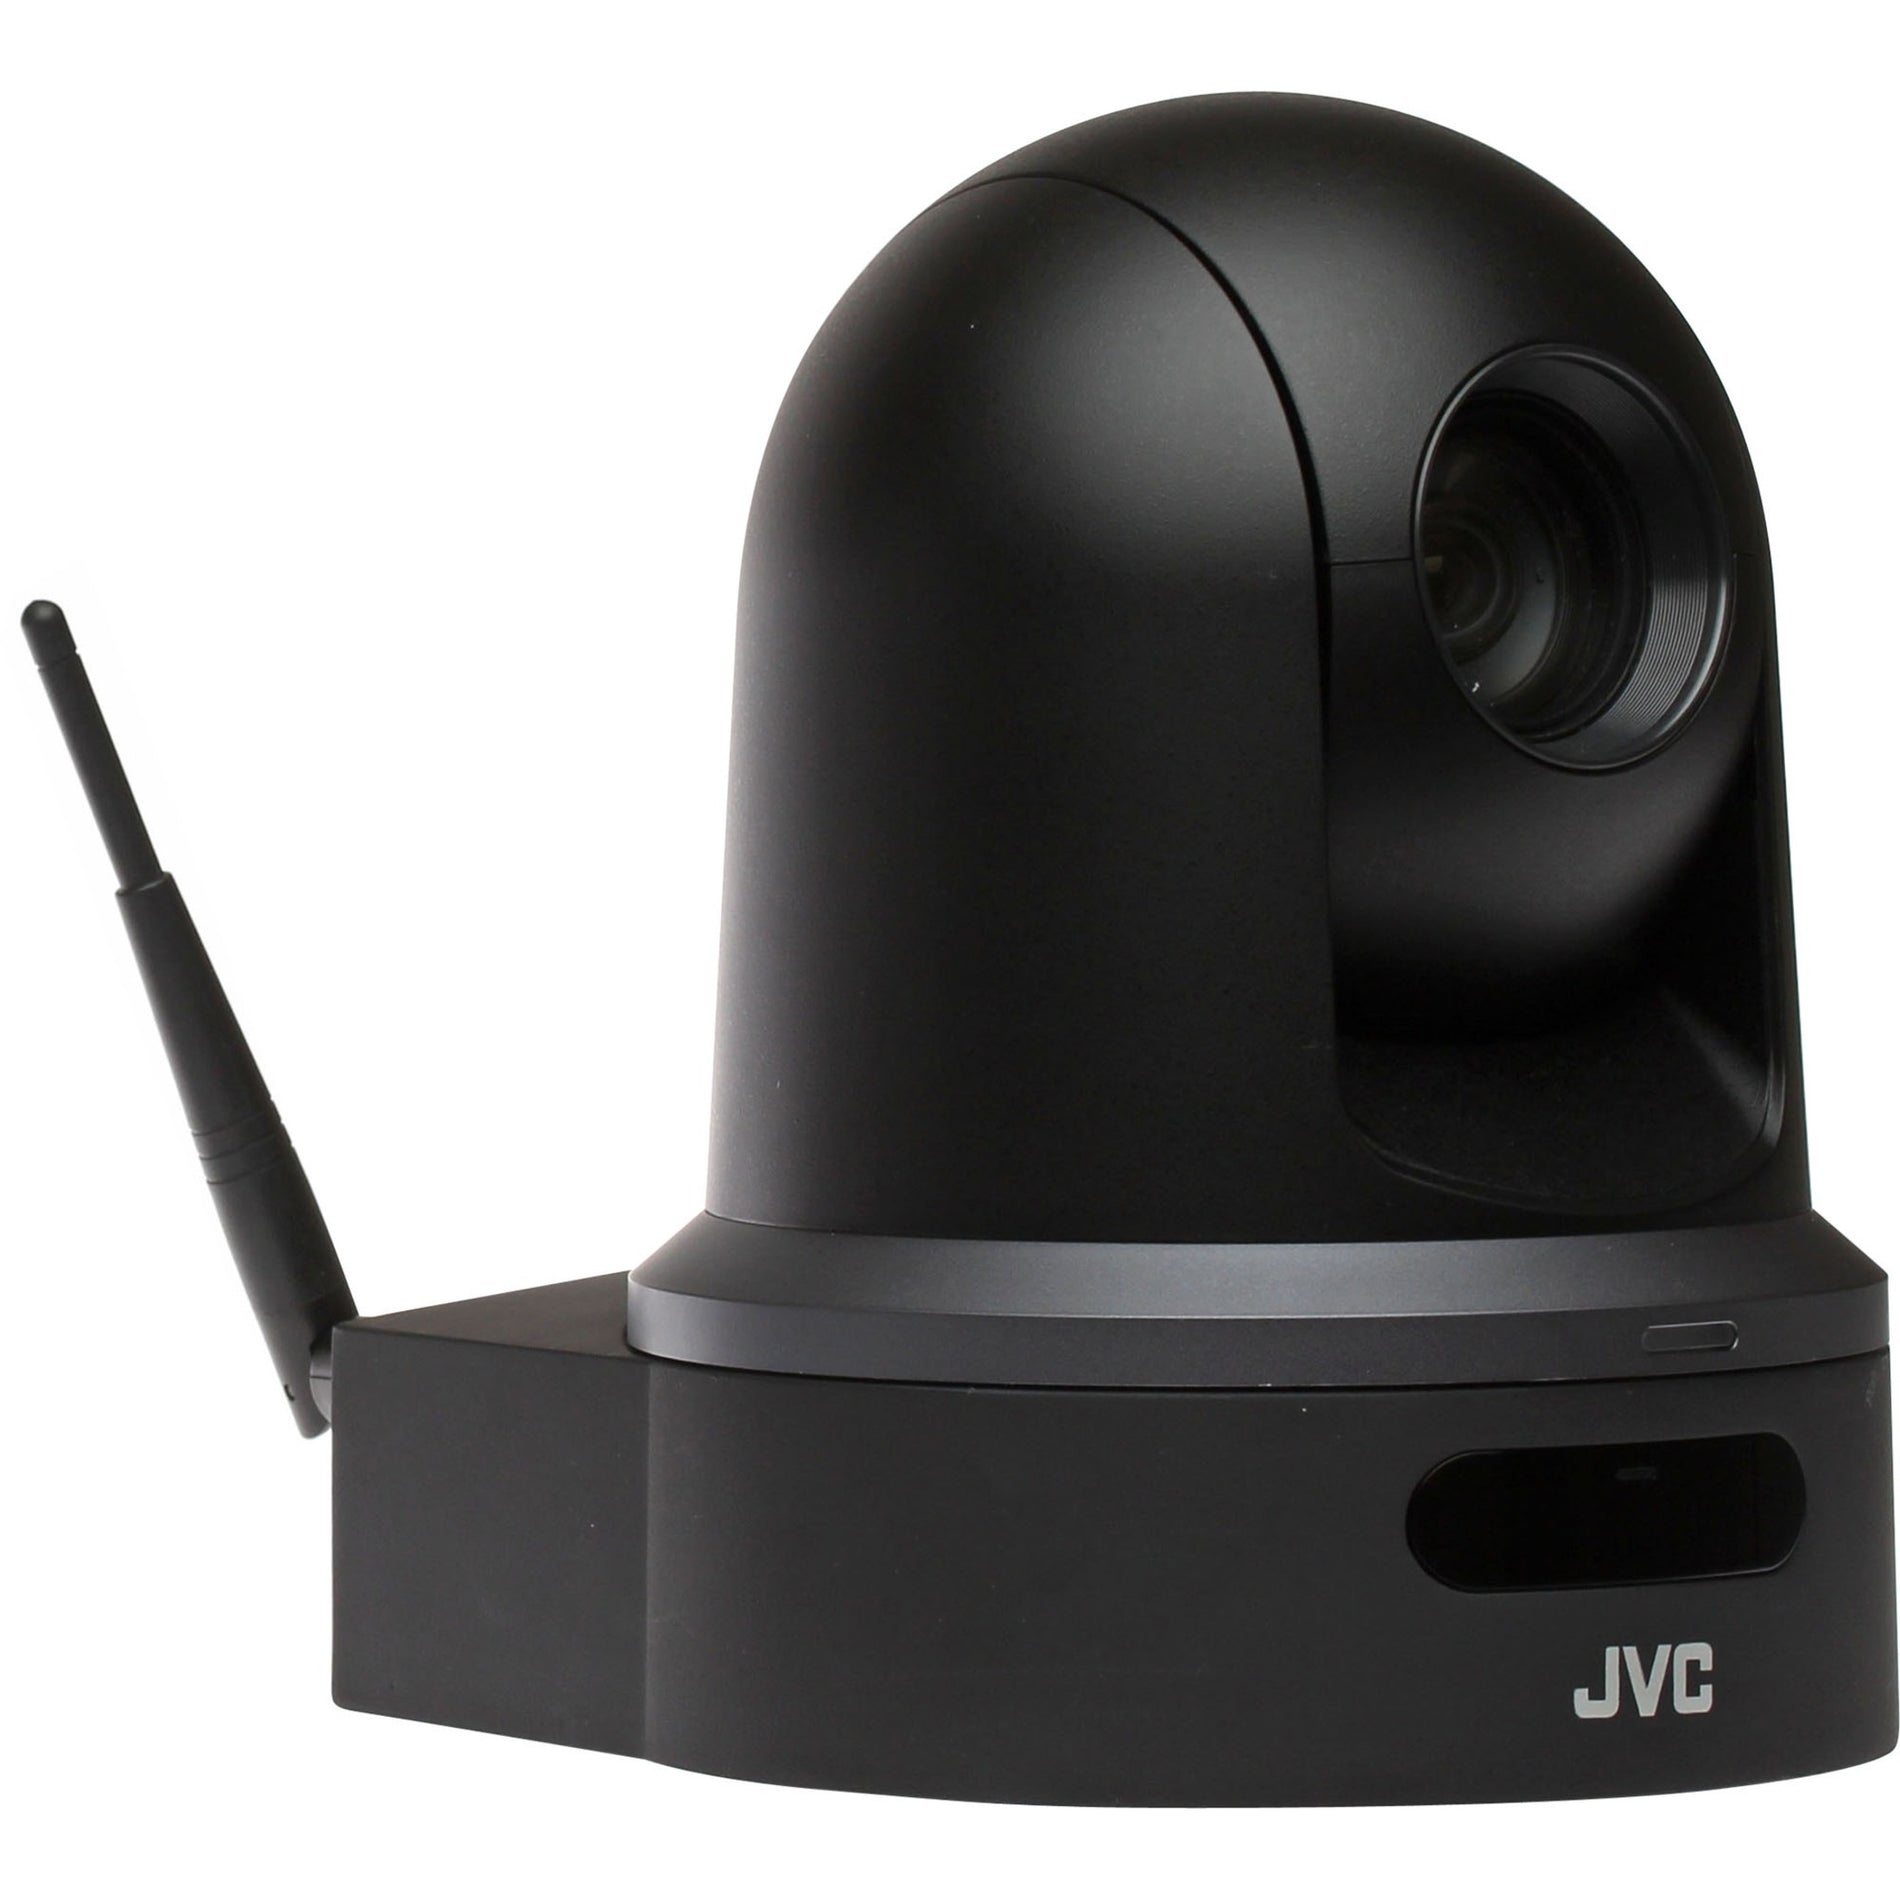 JVC KY-PZ100BU Robotic PTZ Network Video Production Camera (BLACK), 2.1 Megapixel Full HD, 30x Optical Zoom, Memory Card Storage